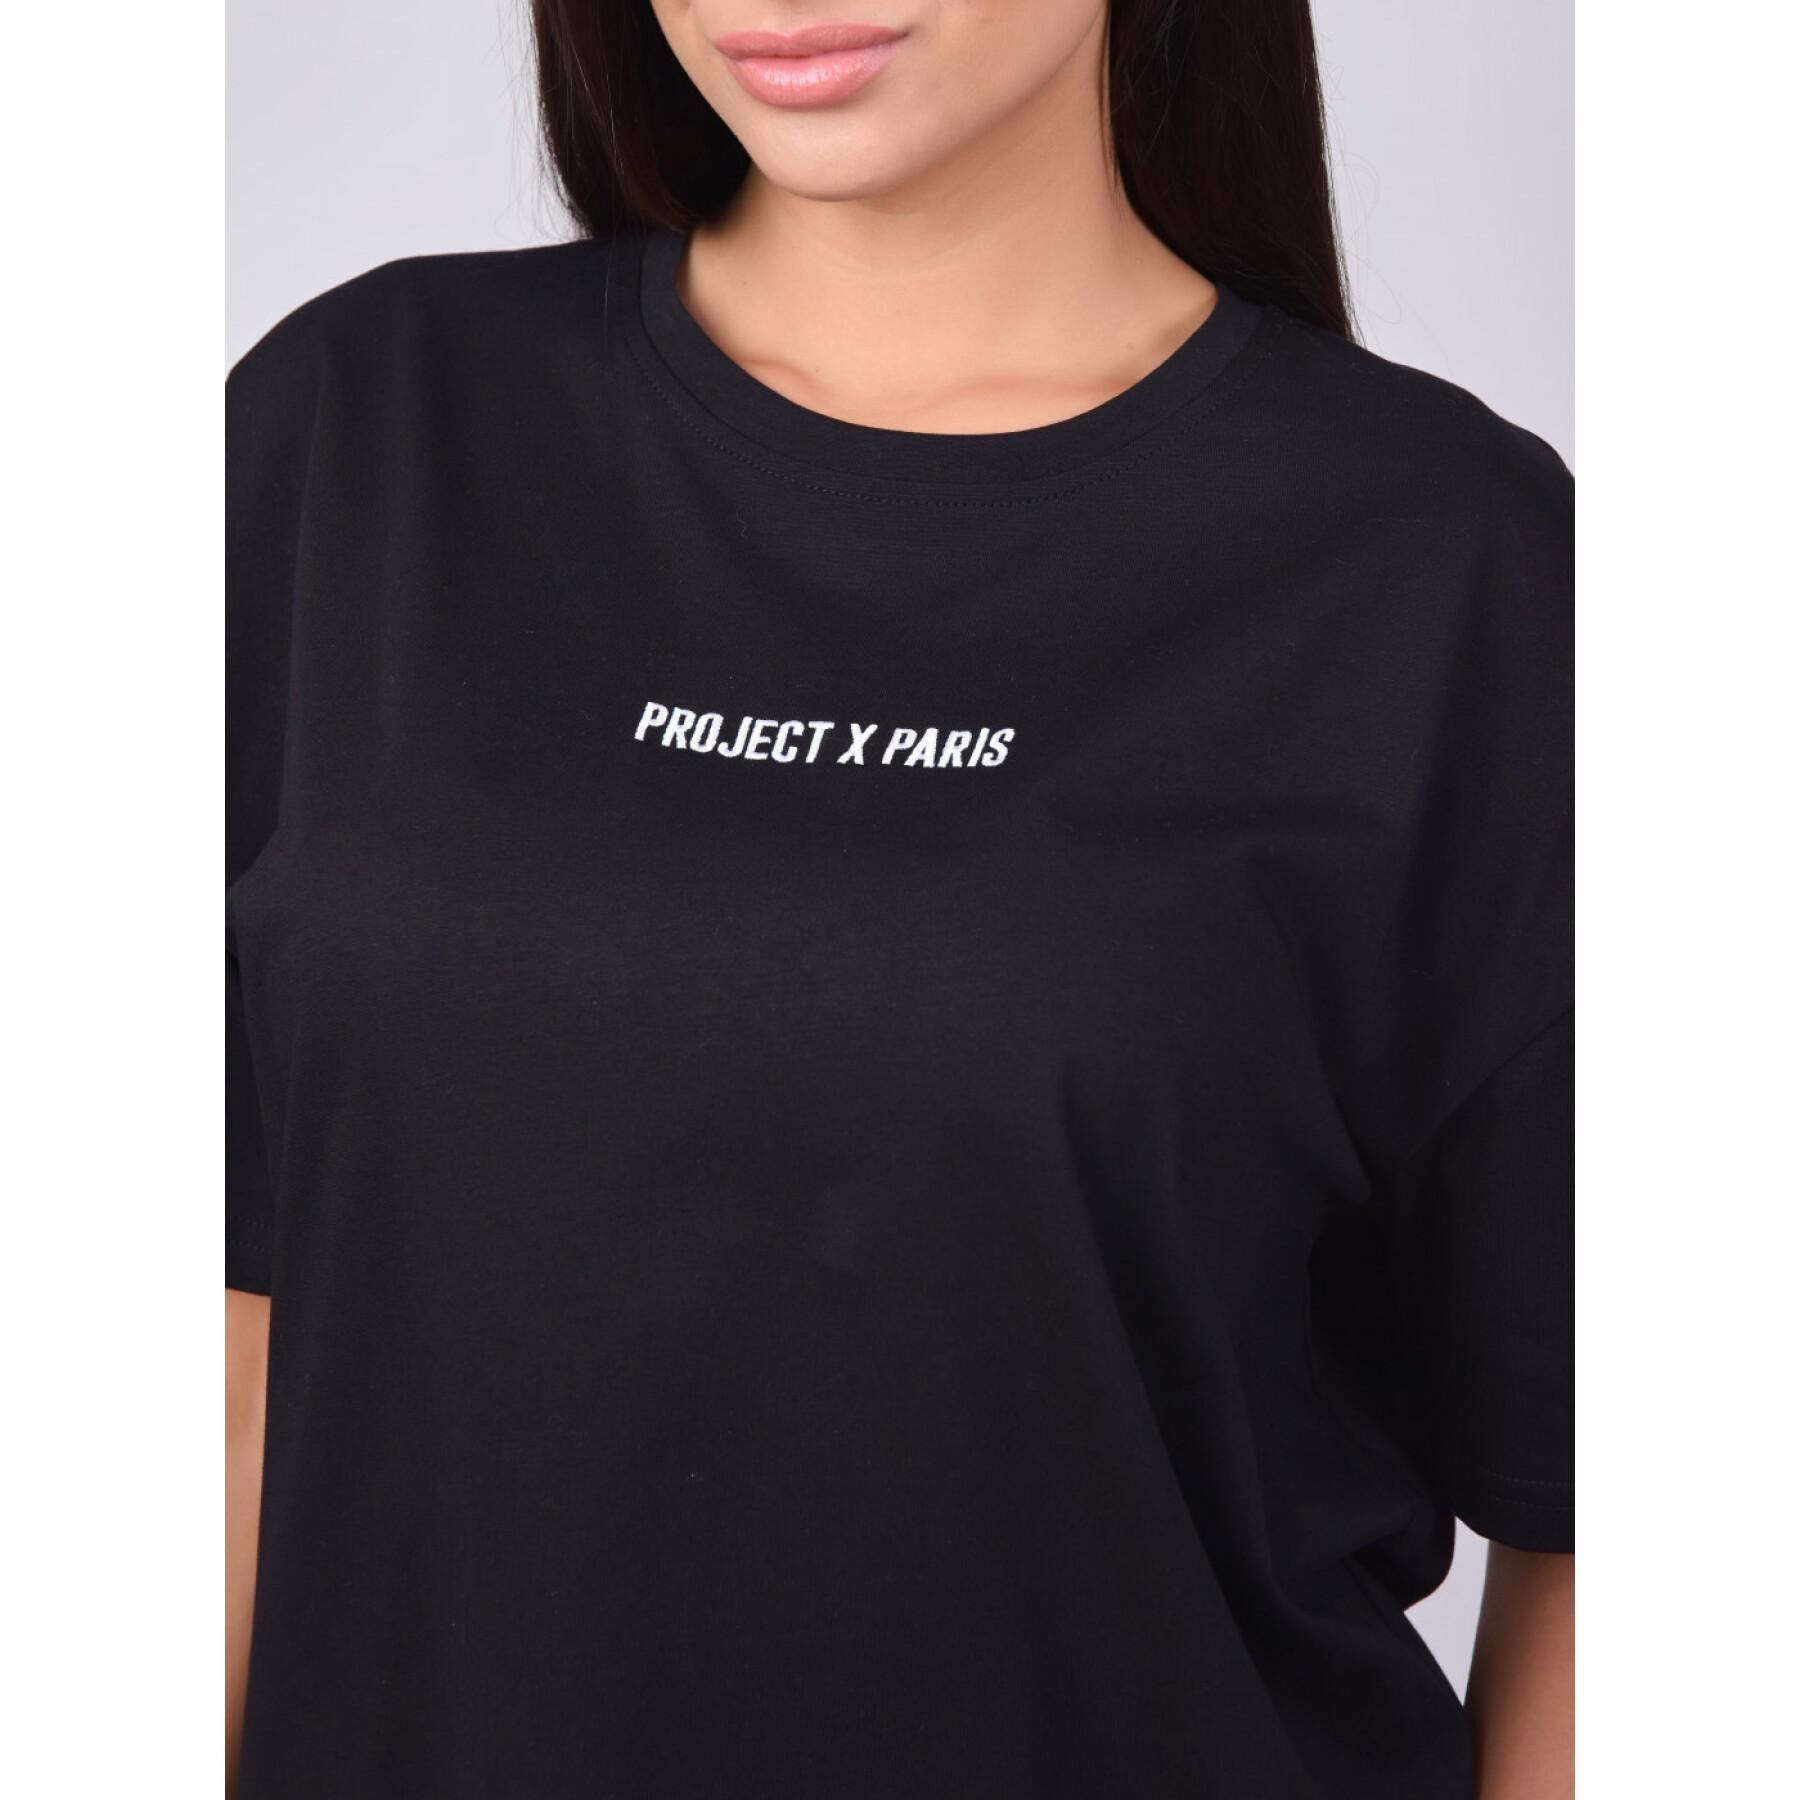 Camiseta mujer Loose Project X Paris